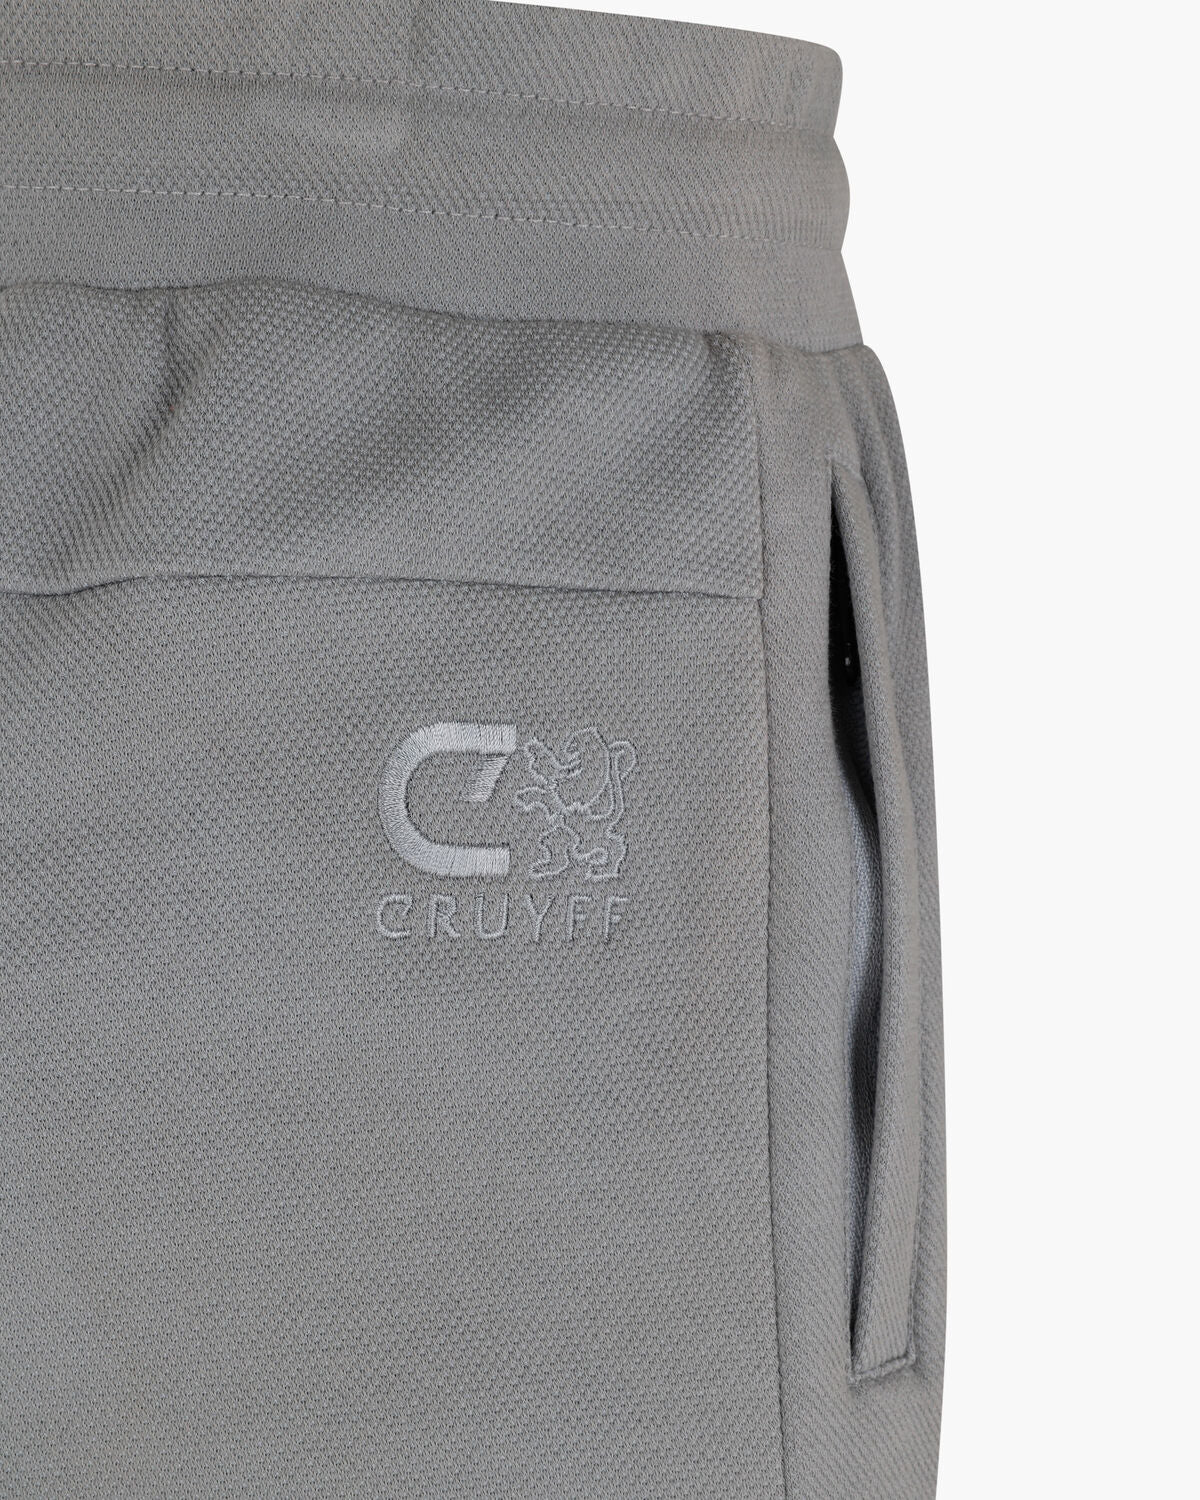 Cruyff Estru Short Grey